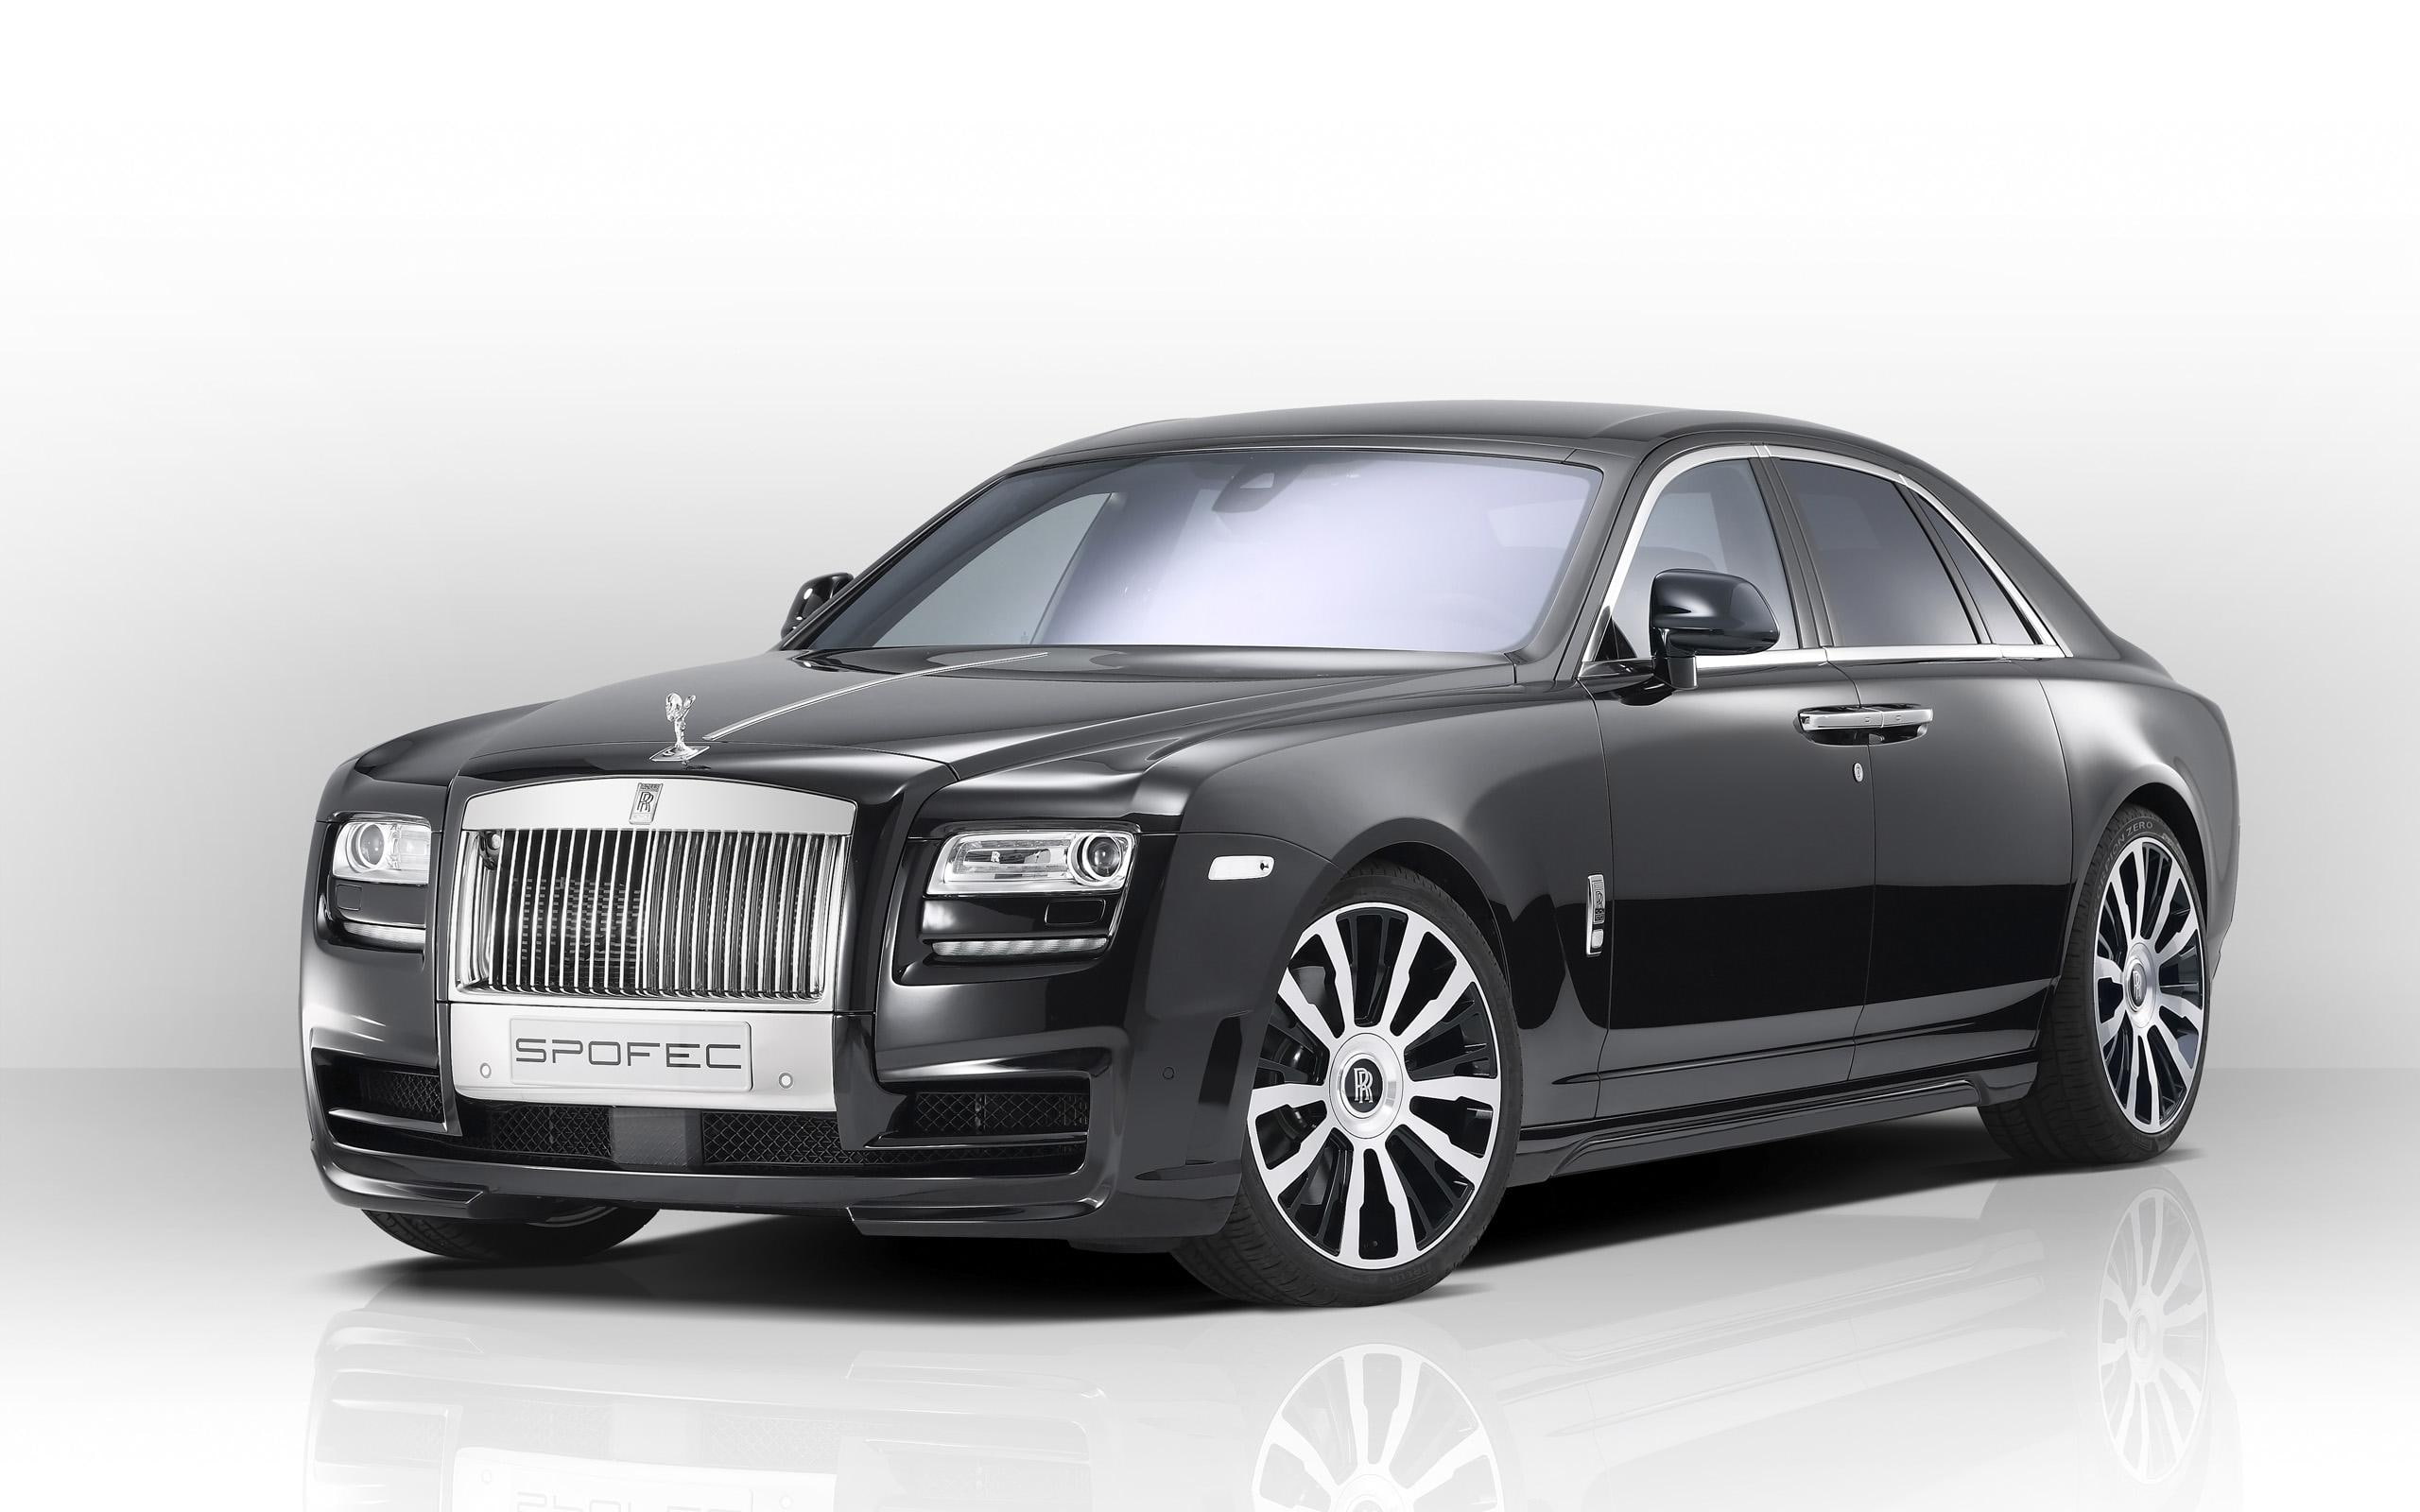 2014 Spofec Rolls Royce Ghost, gray cadillac sedan, cars